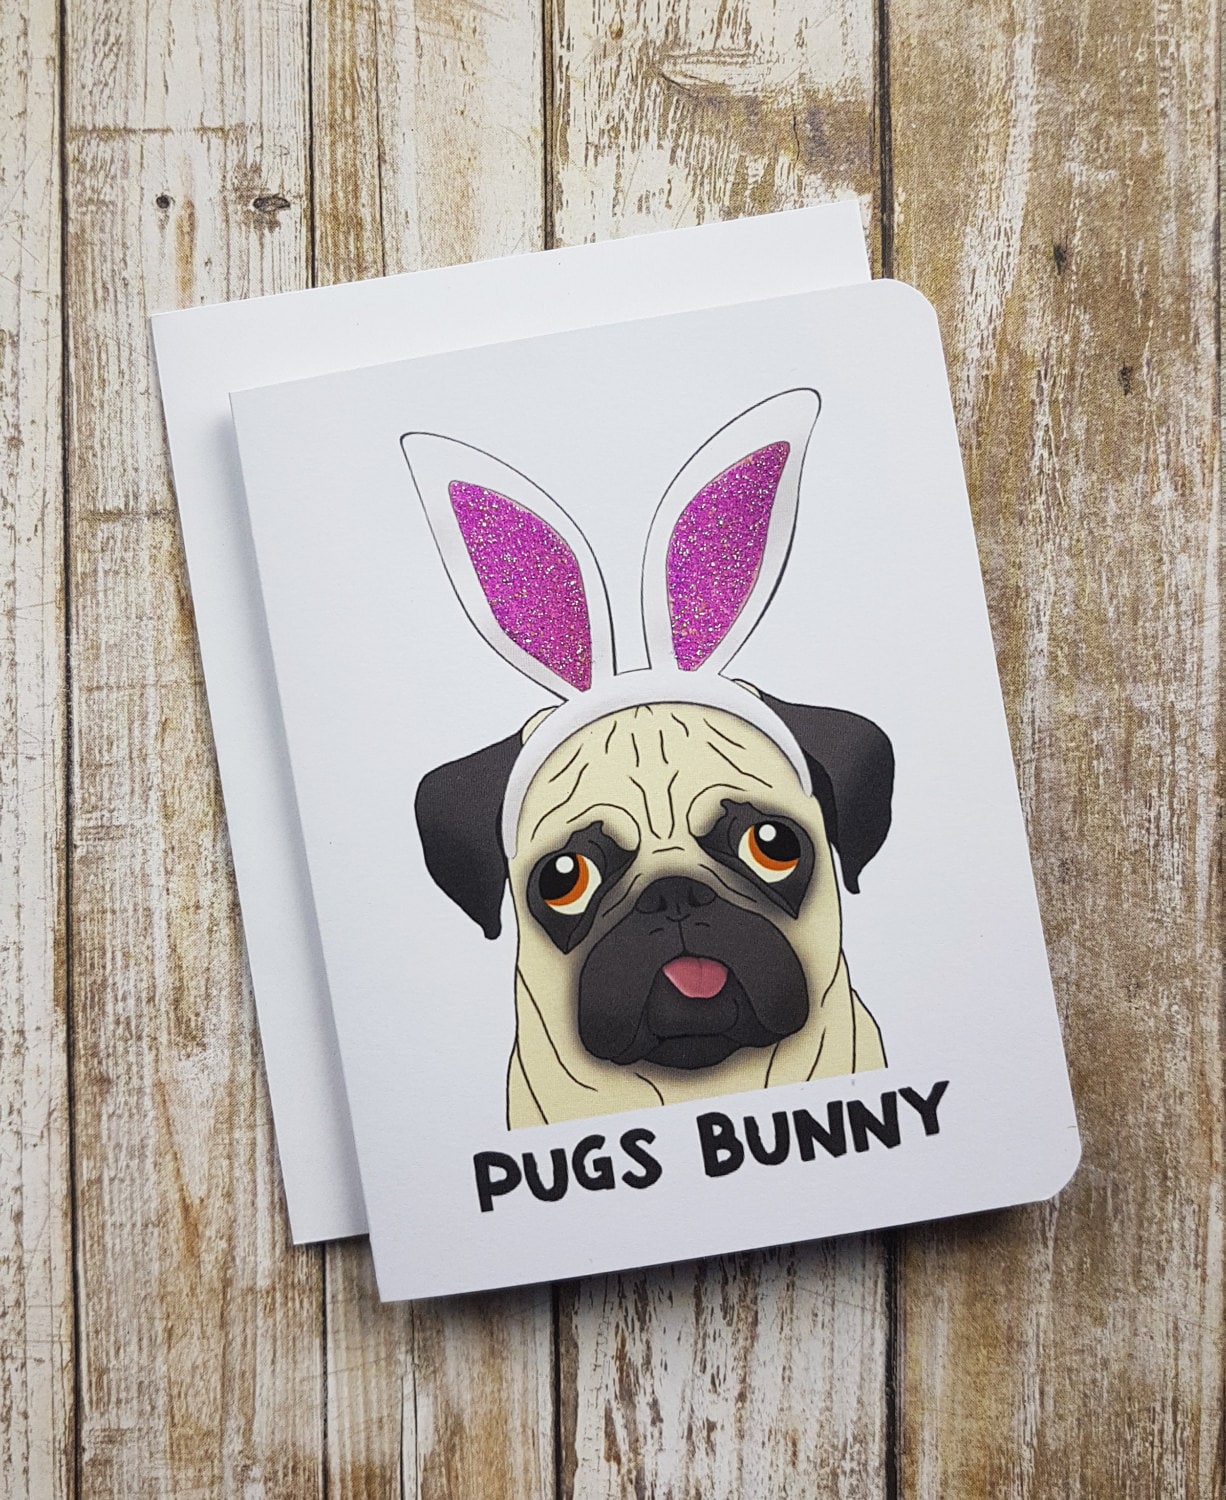 Pugs Bunny Glitter Card